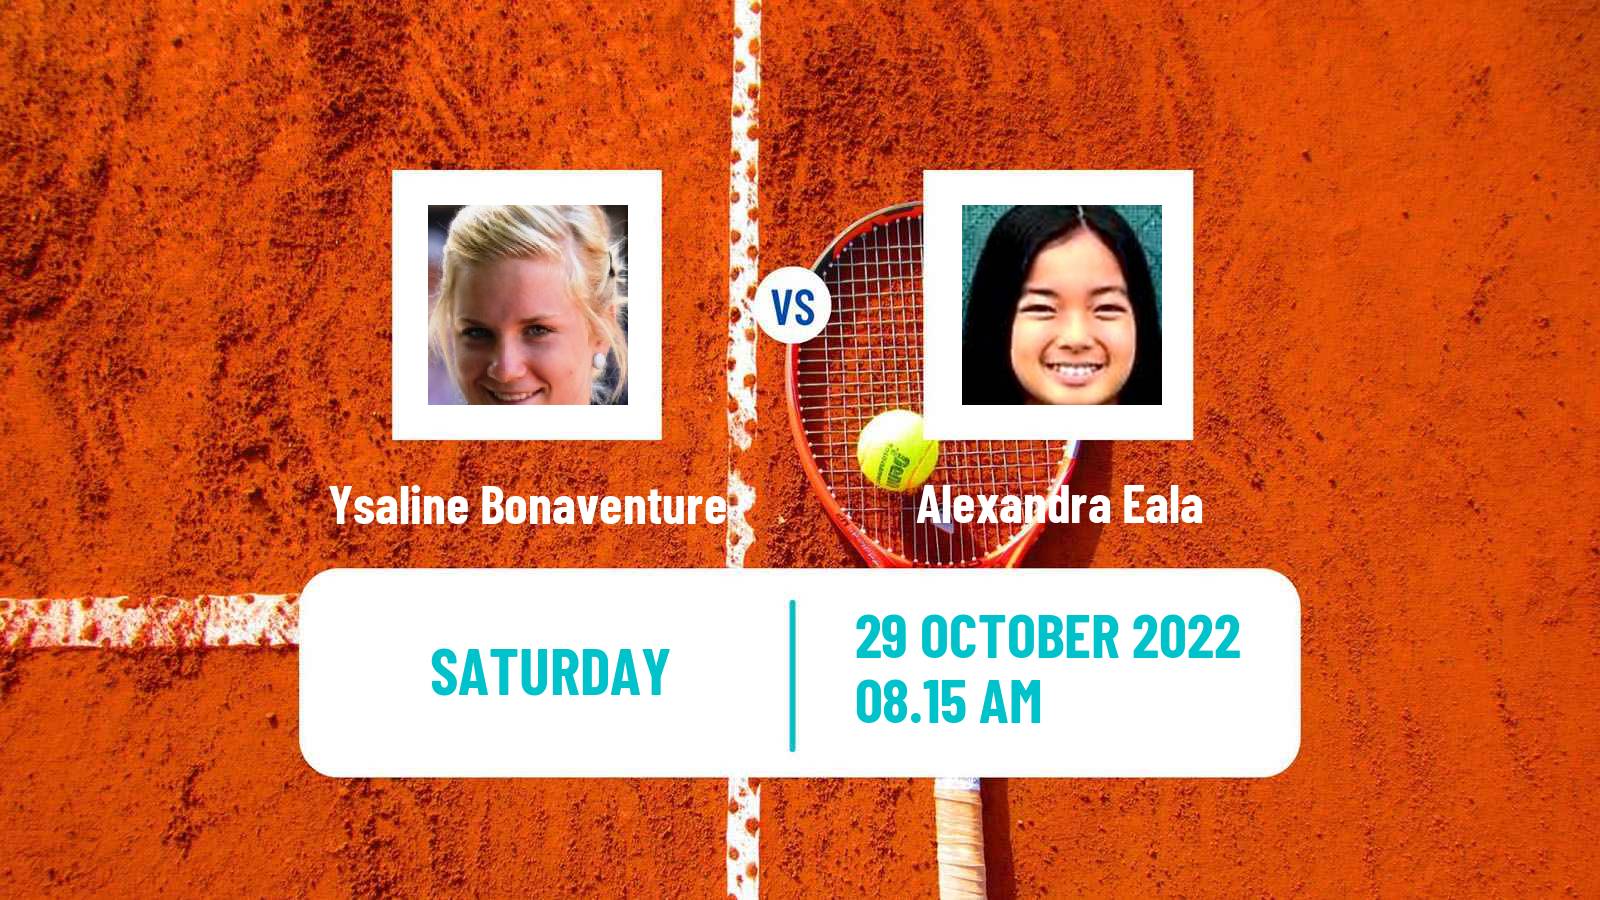 Tennis ITF Tournaments Ysaline Bonaventure - Alexandra Eala